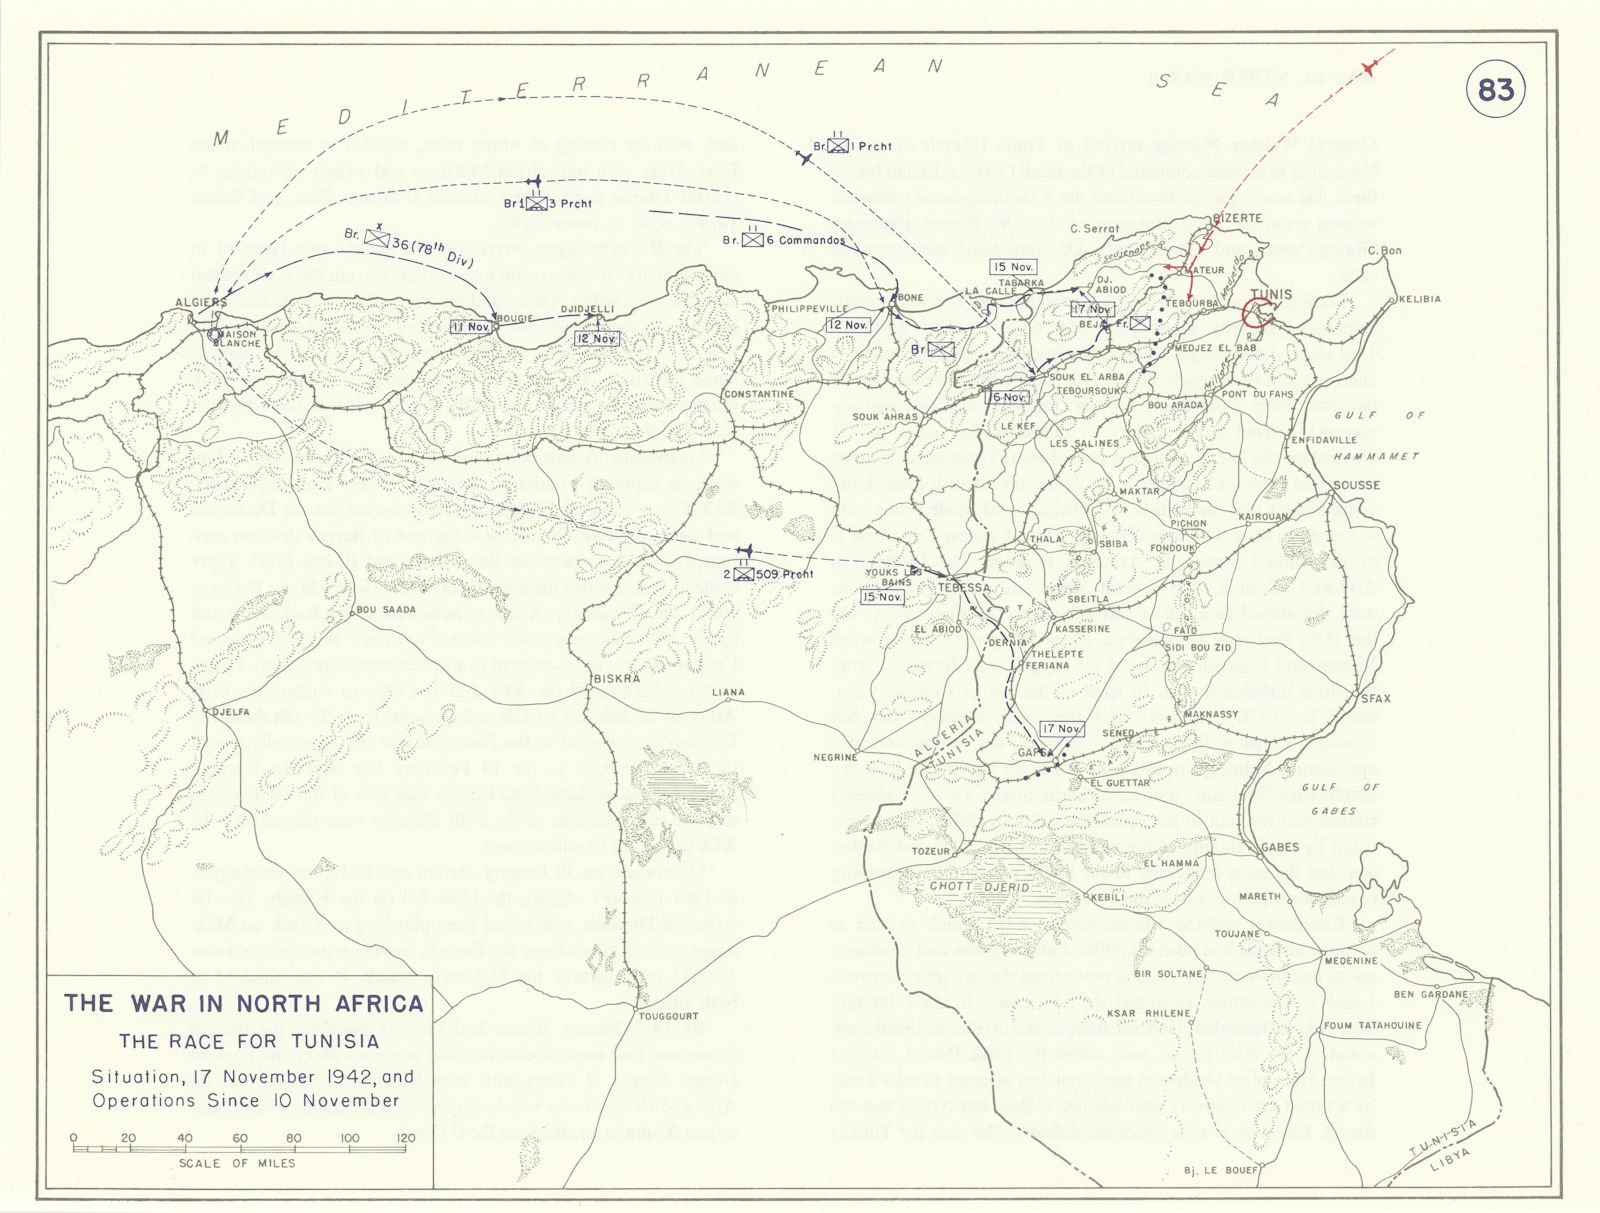 World War 2. North Africa. November 1942. Race for Tunisia. Algeria 1959 map